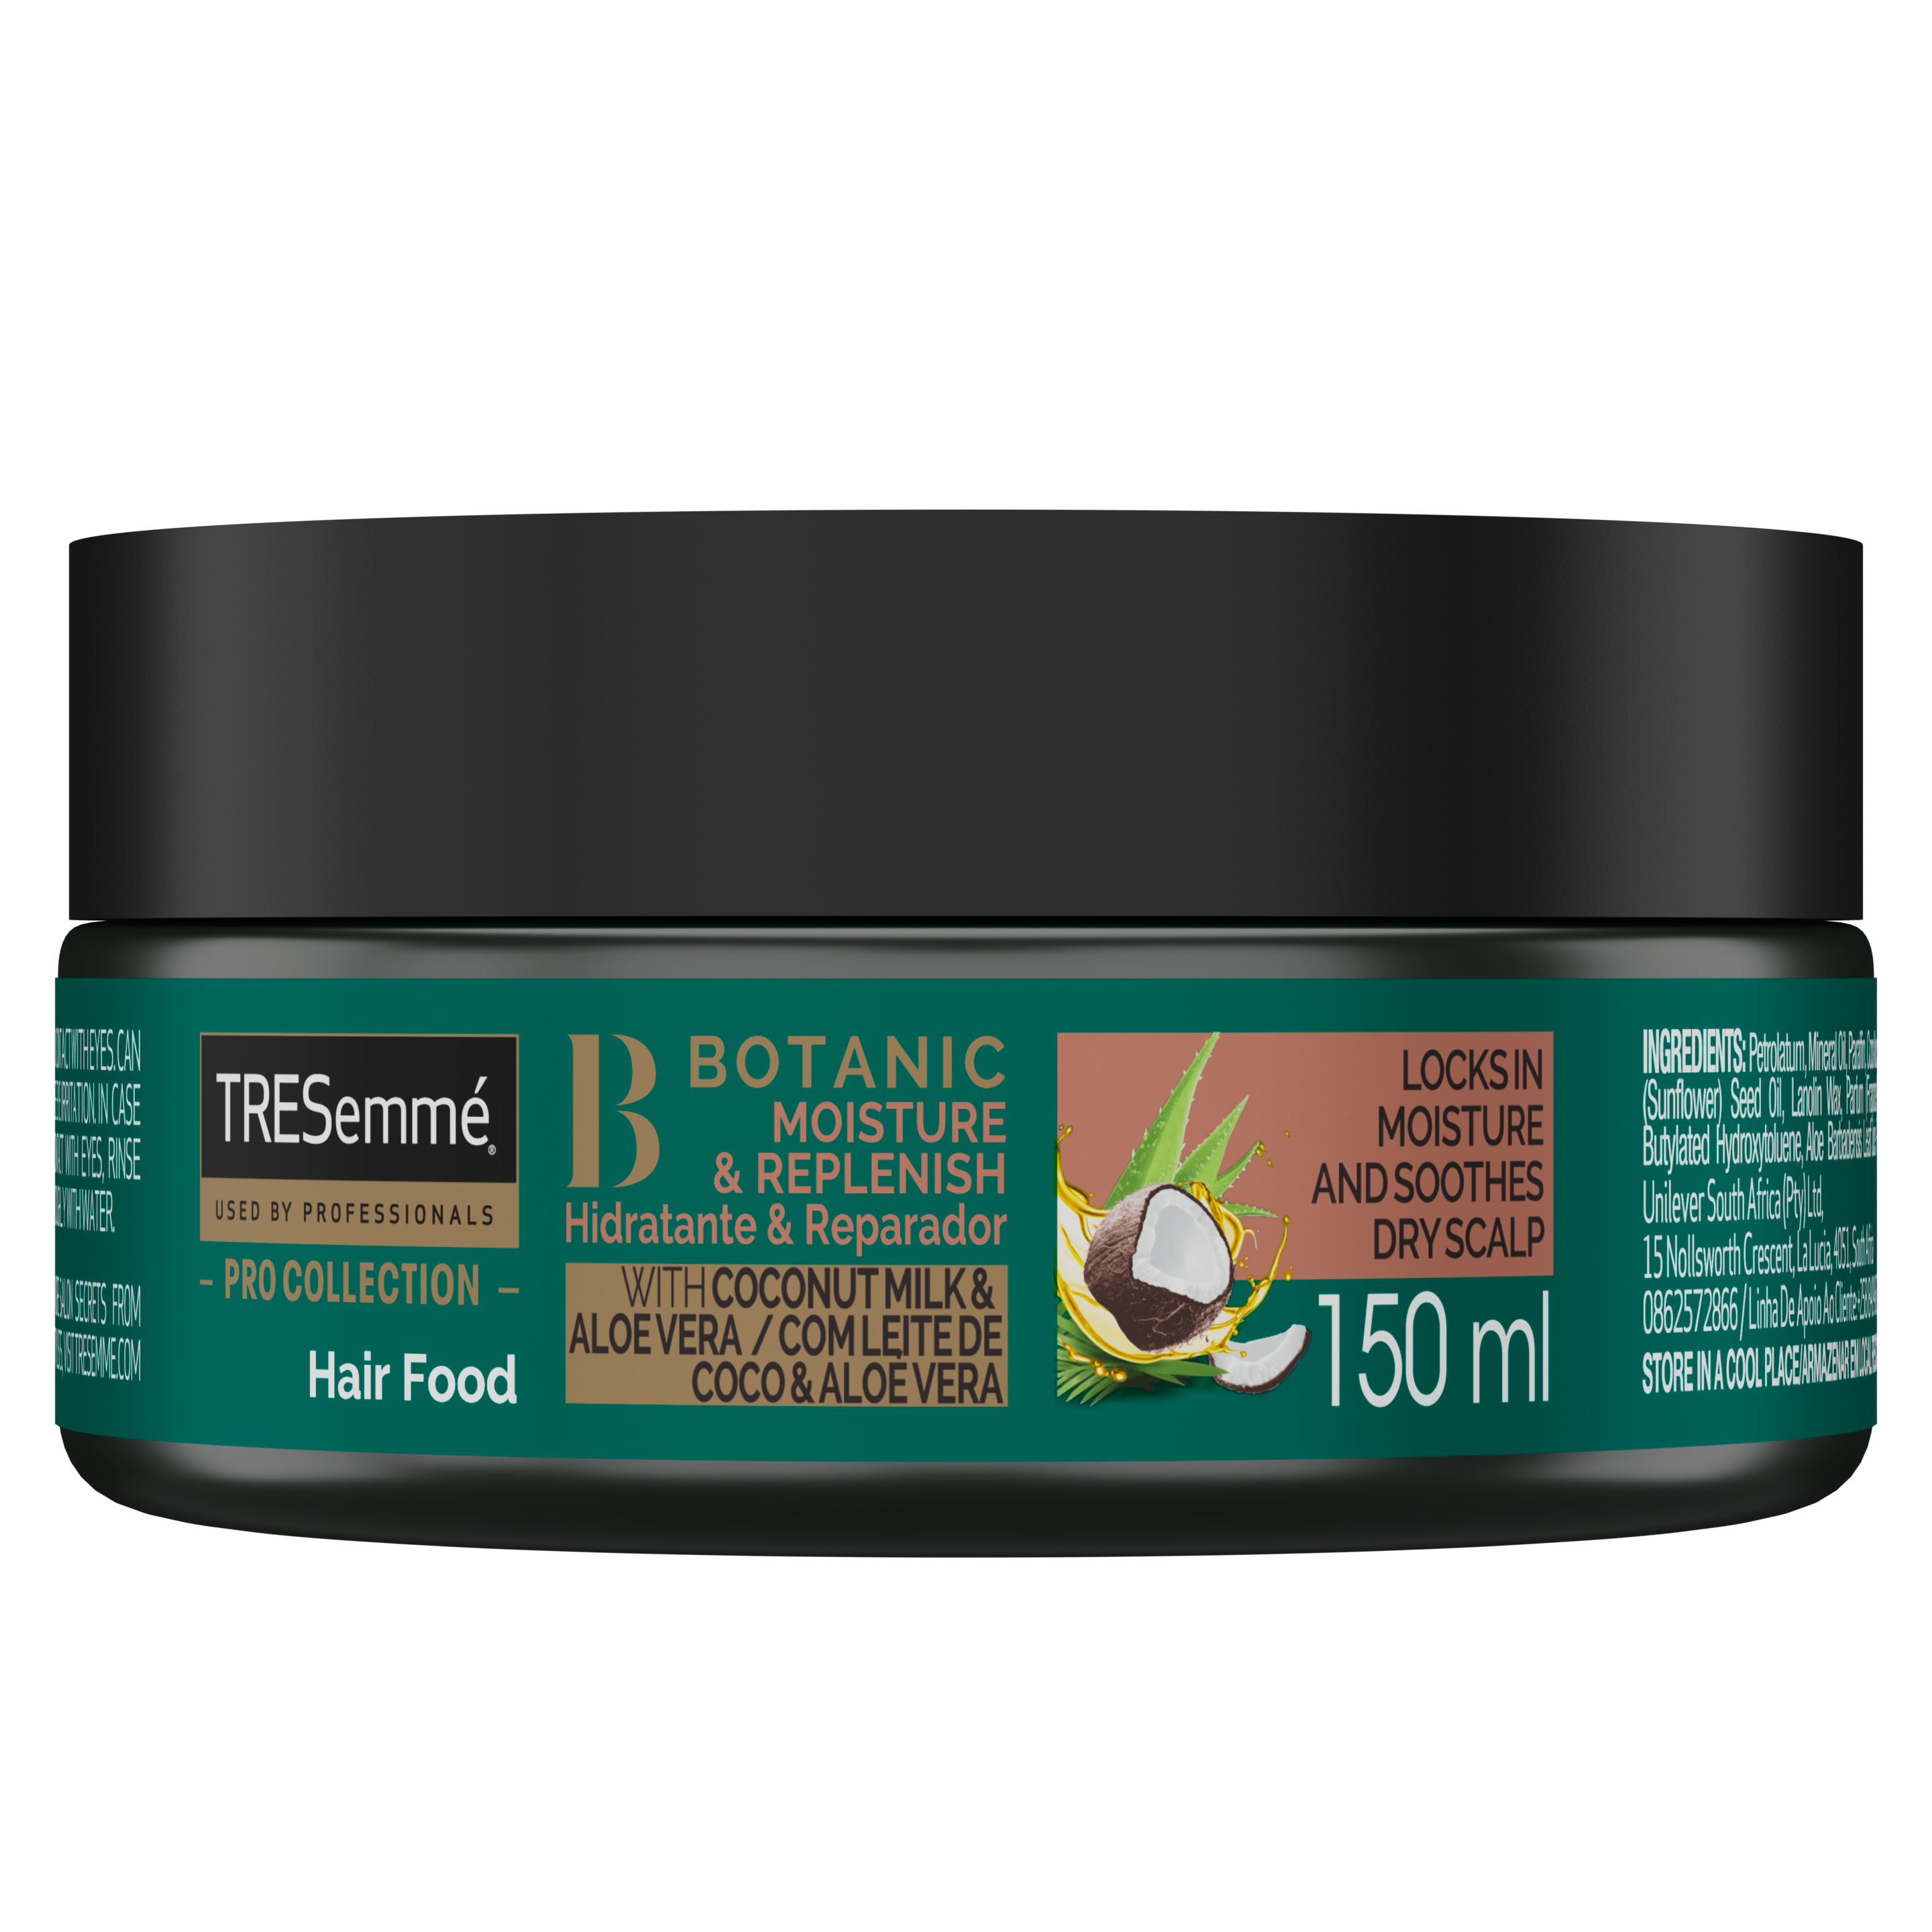 TRESemmé Botanic Moisture & Replenish Hair Food 150ml Front of pack image